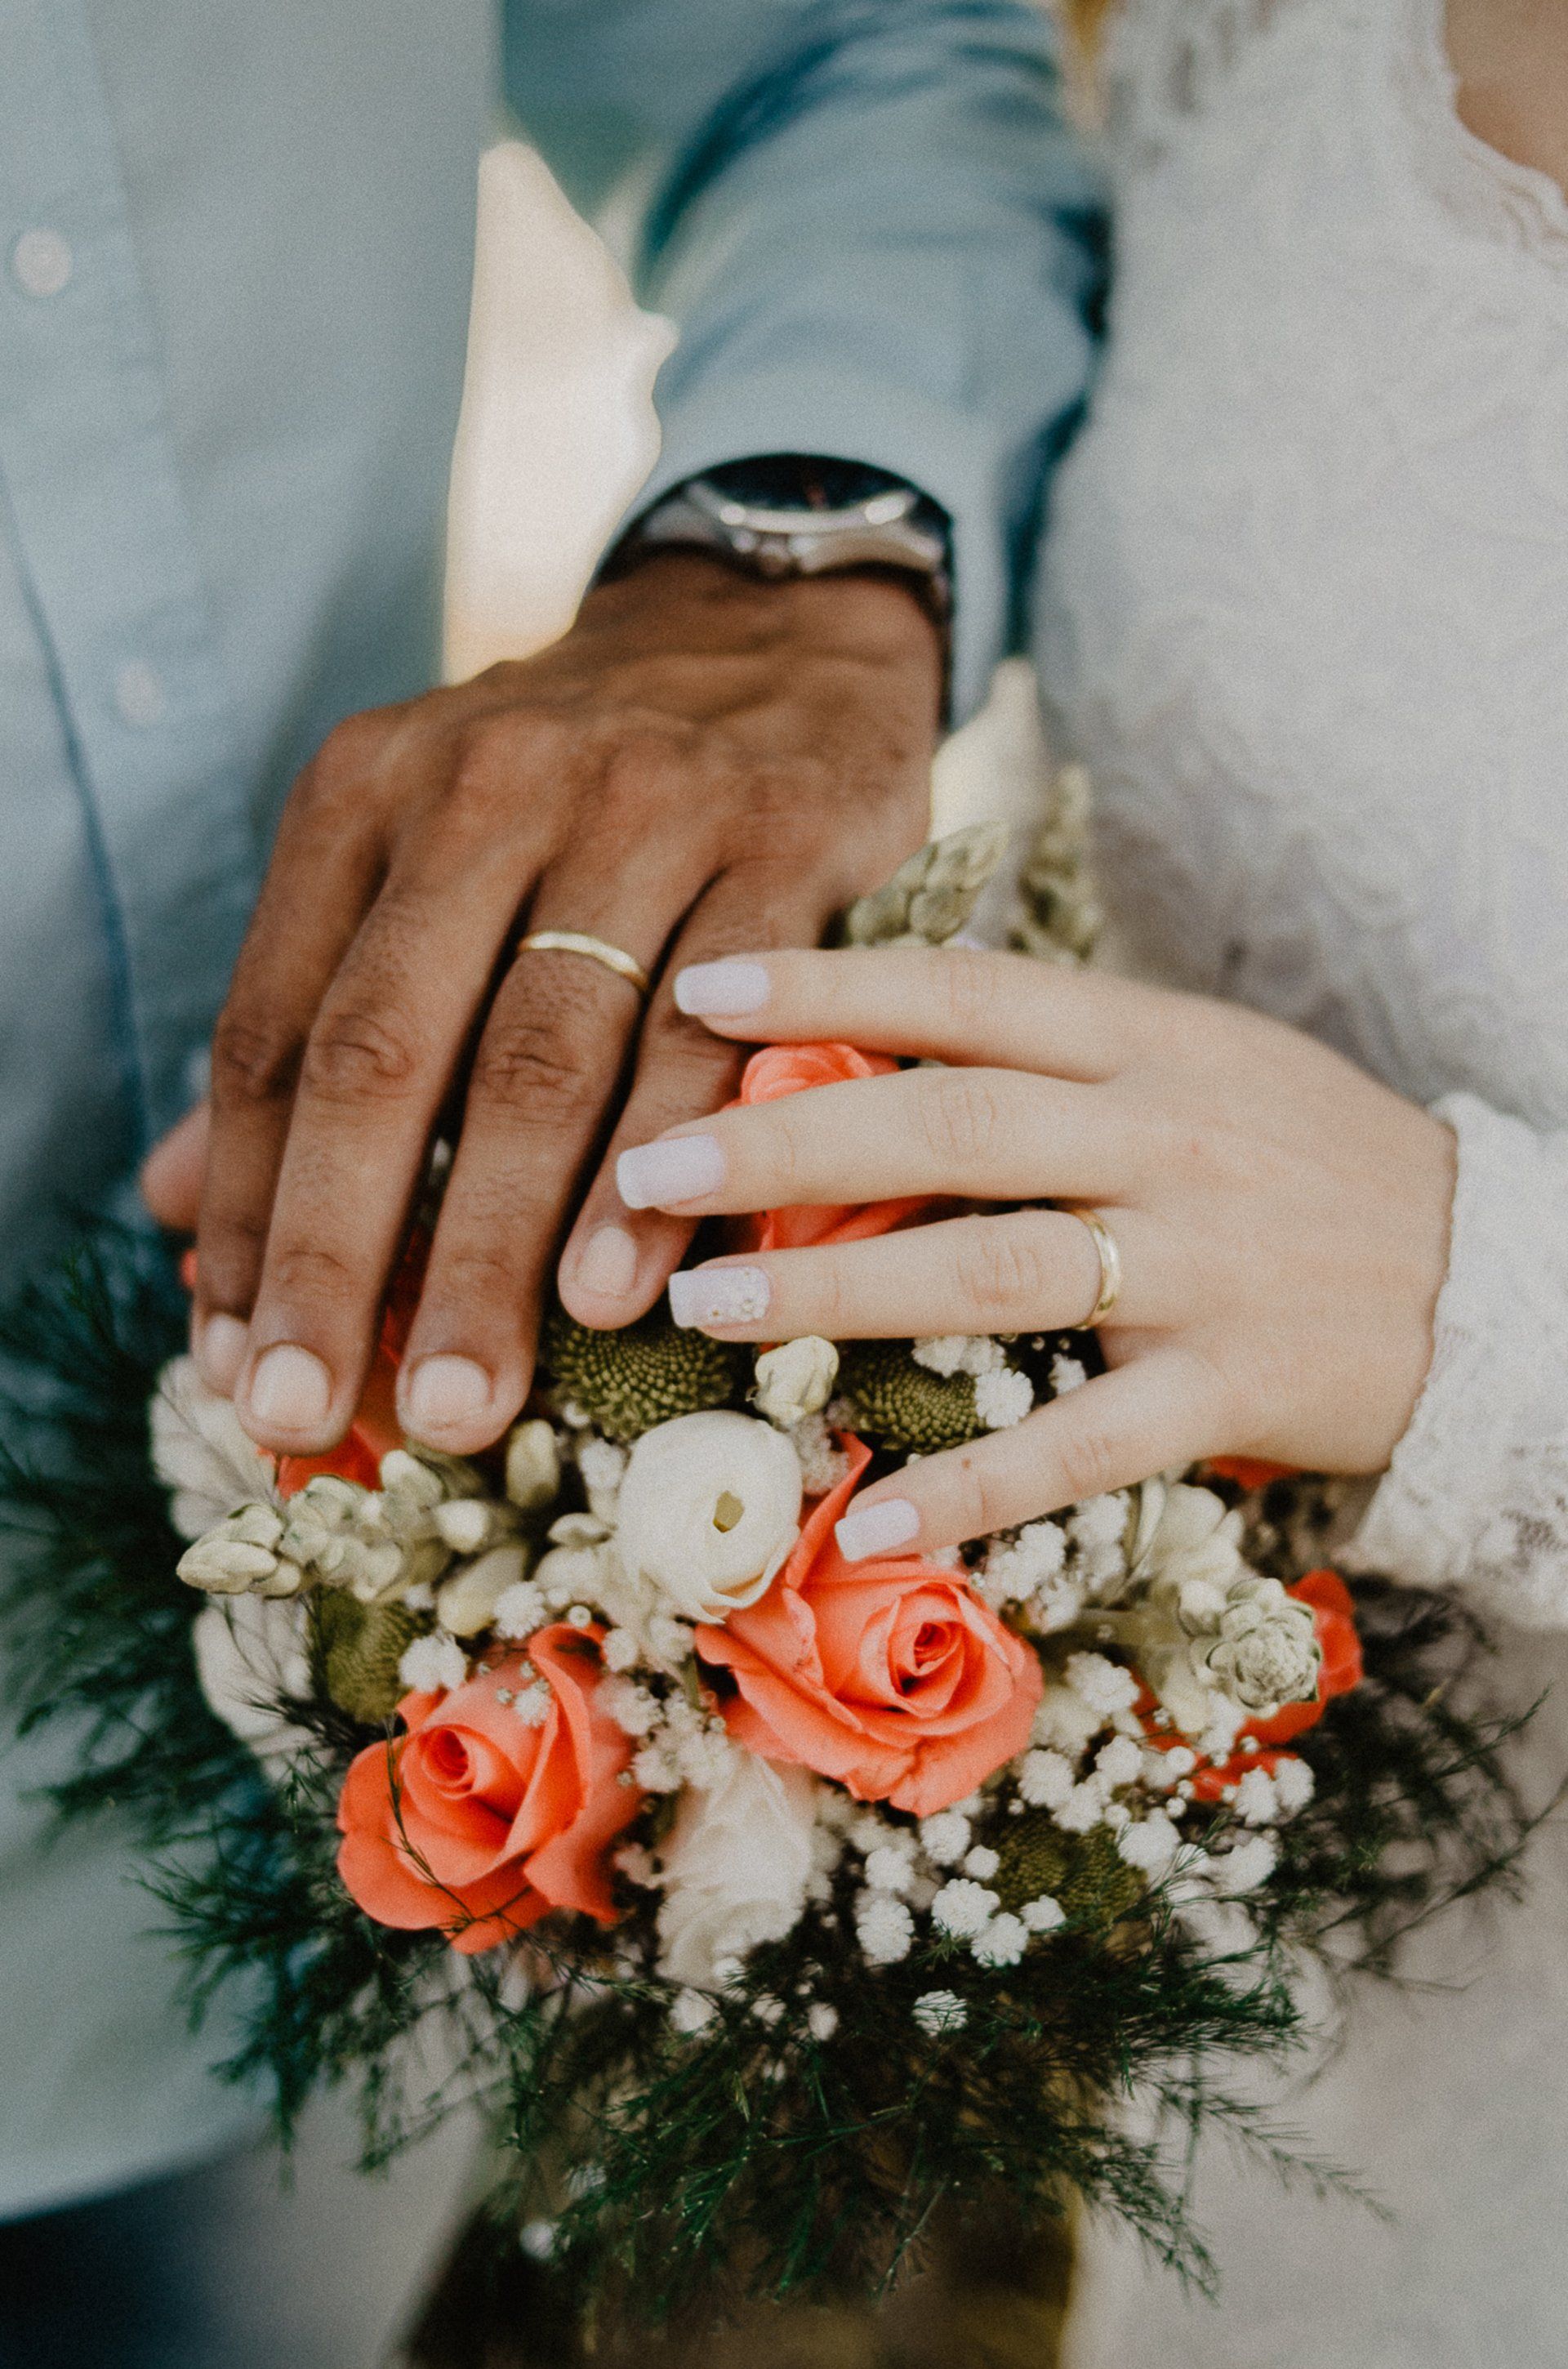 Intimate Wedding Ceremony Ideas That Break the Mold